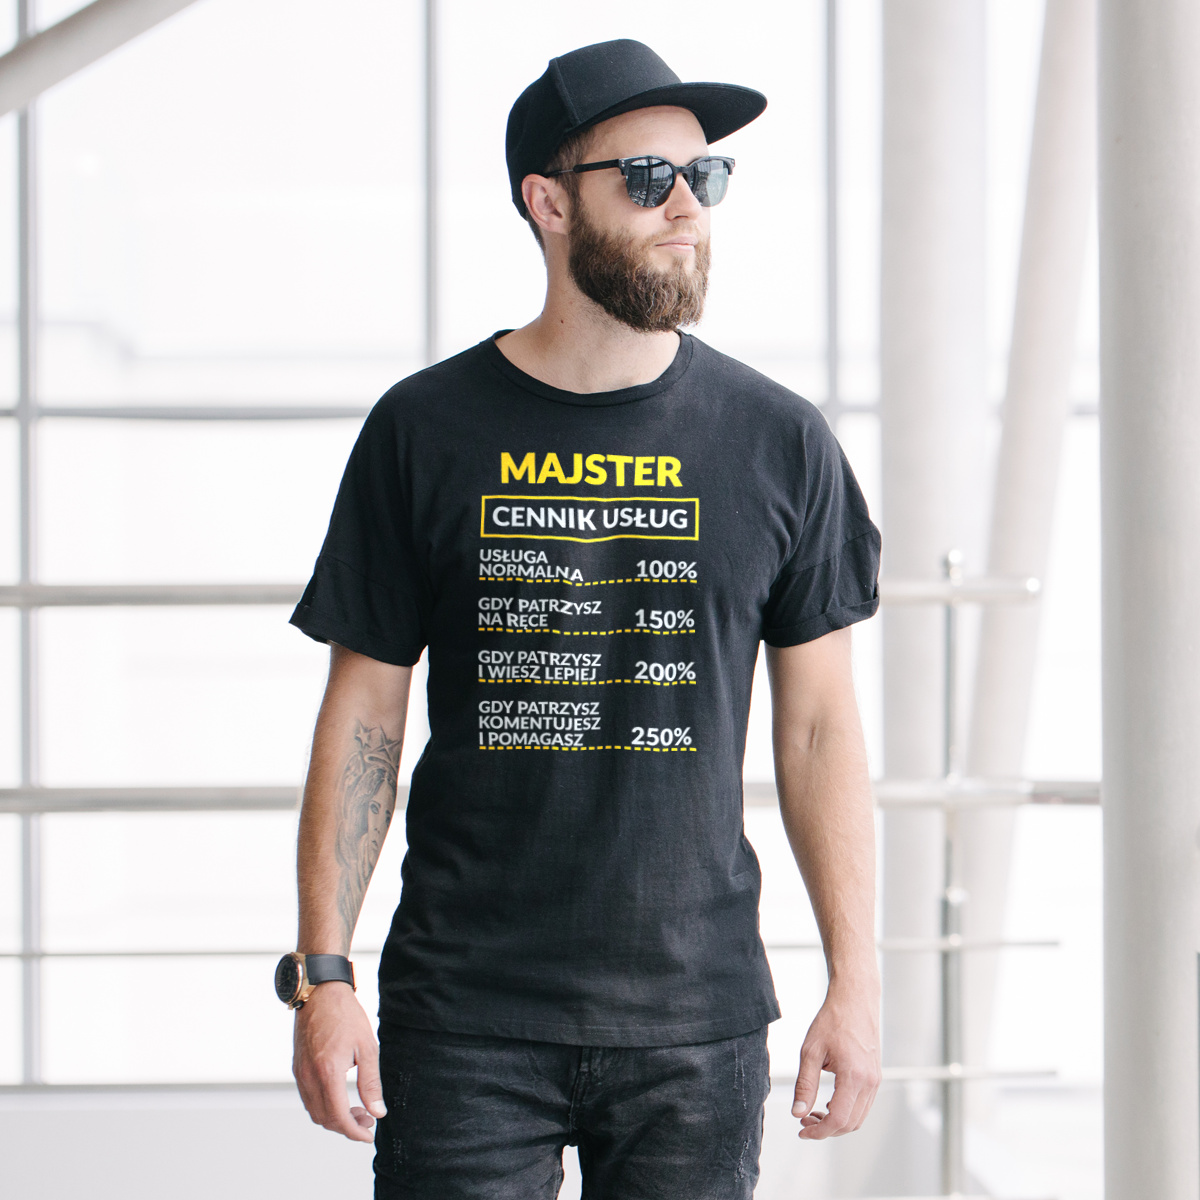 Majster - Cennik Usług - Męska Koszulka Czarna